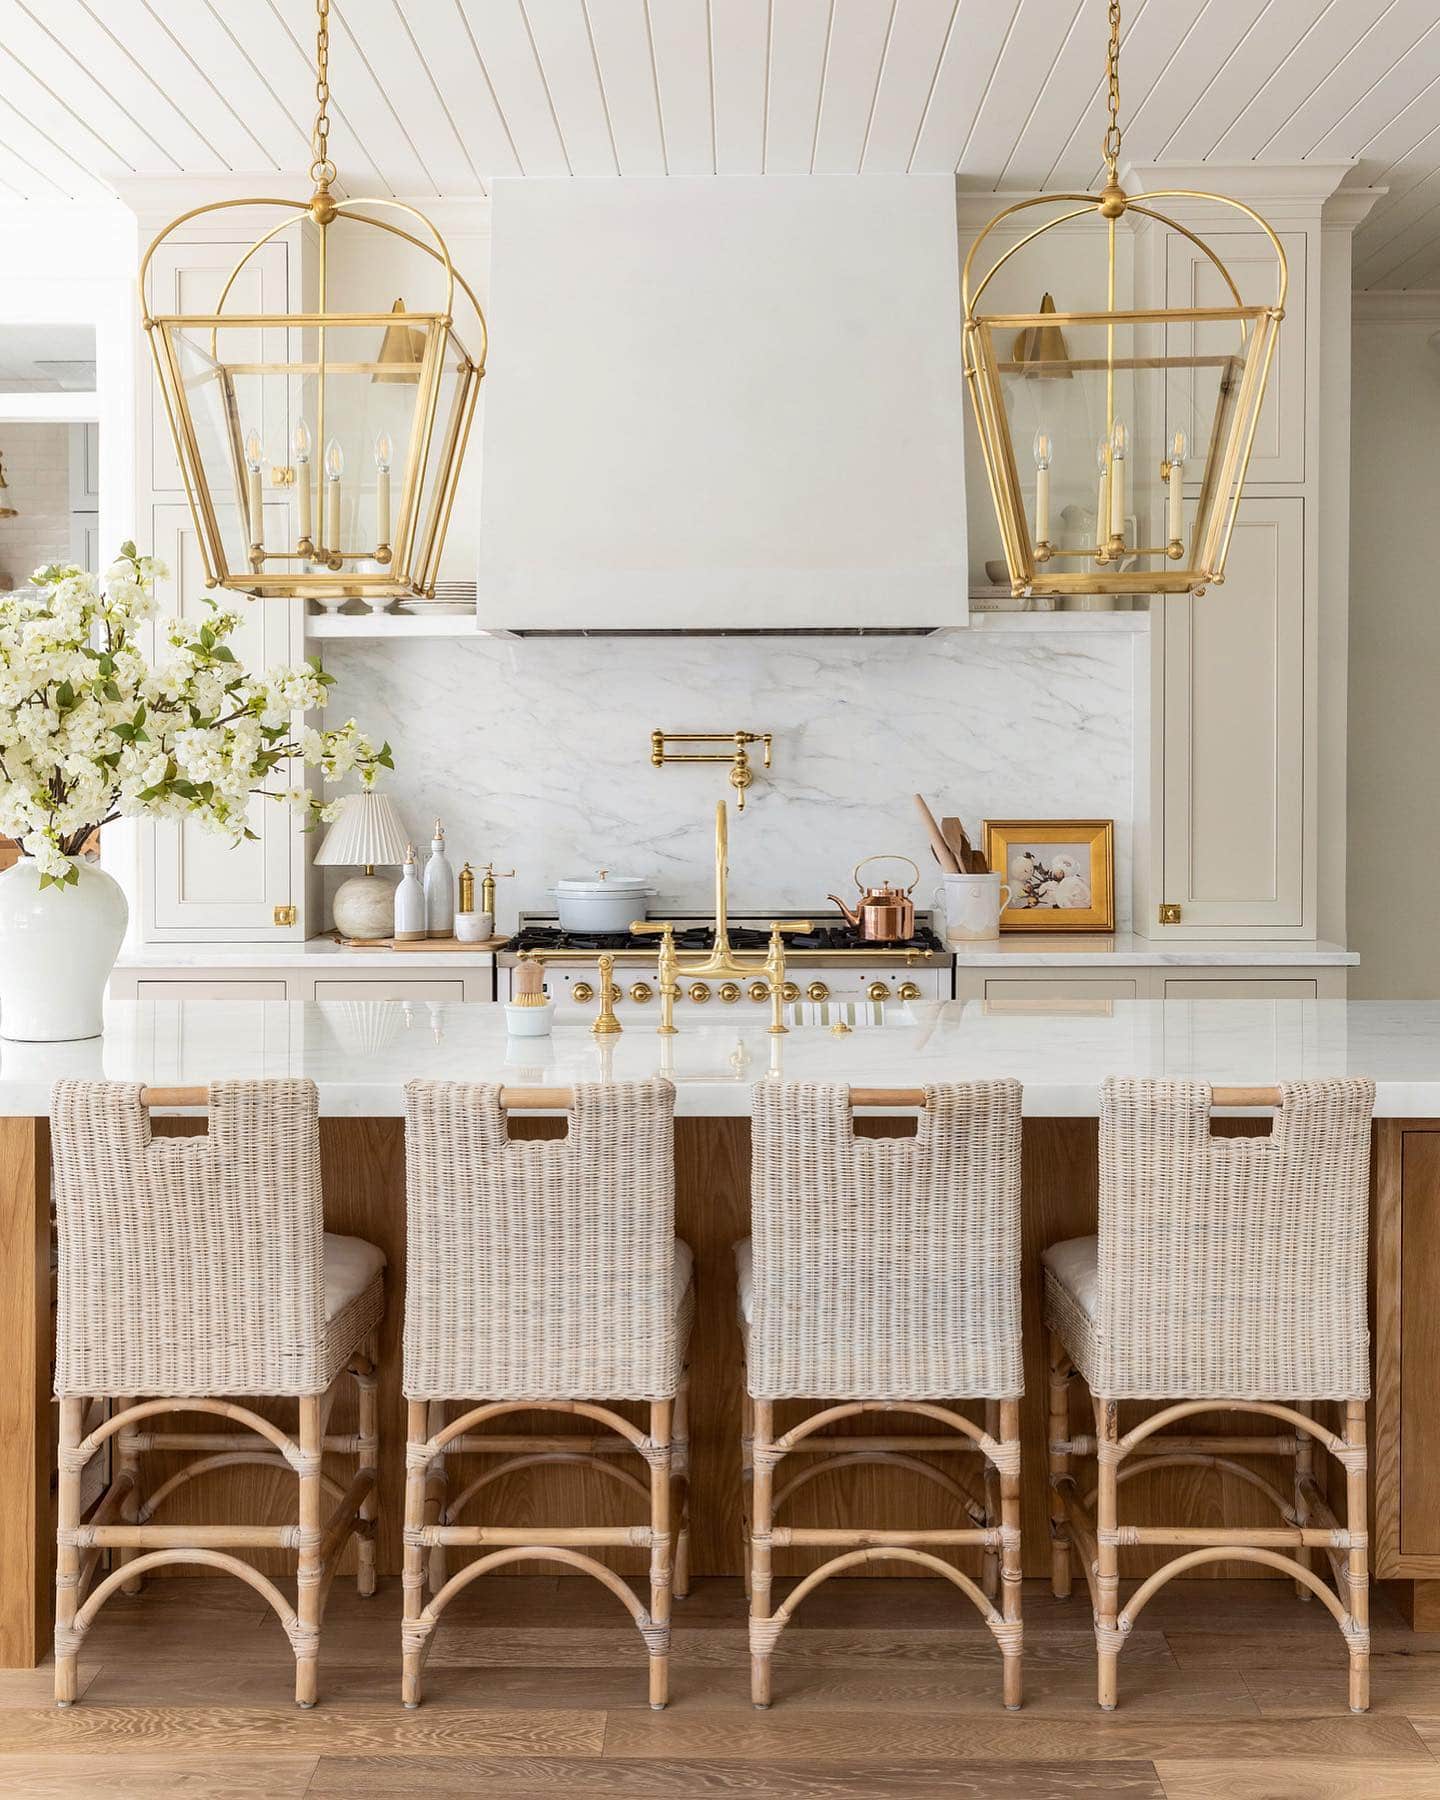 elegant timeless decor kitchen featured in "Timeless vs. Trendy Decor" 